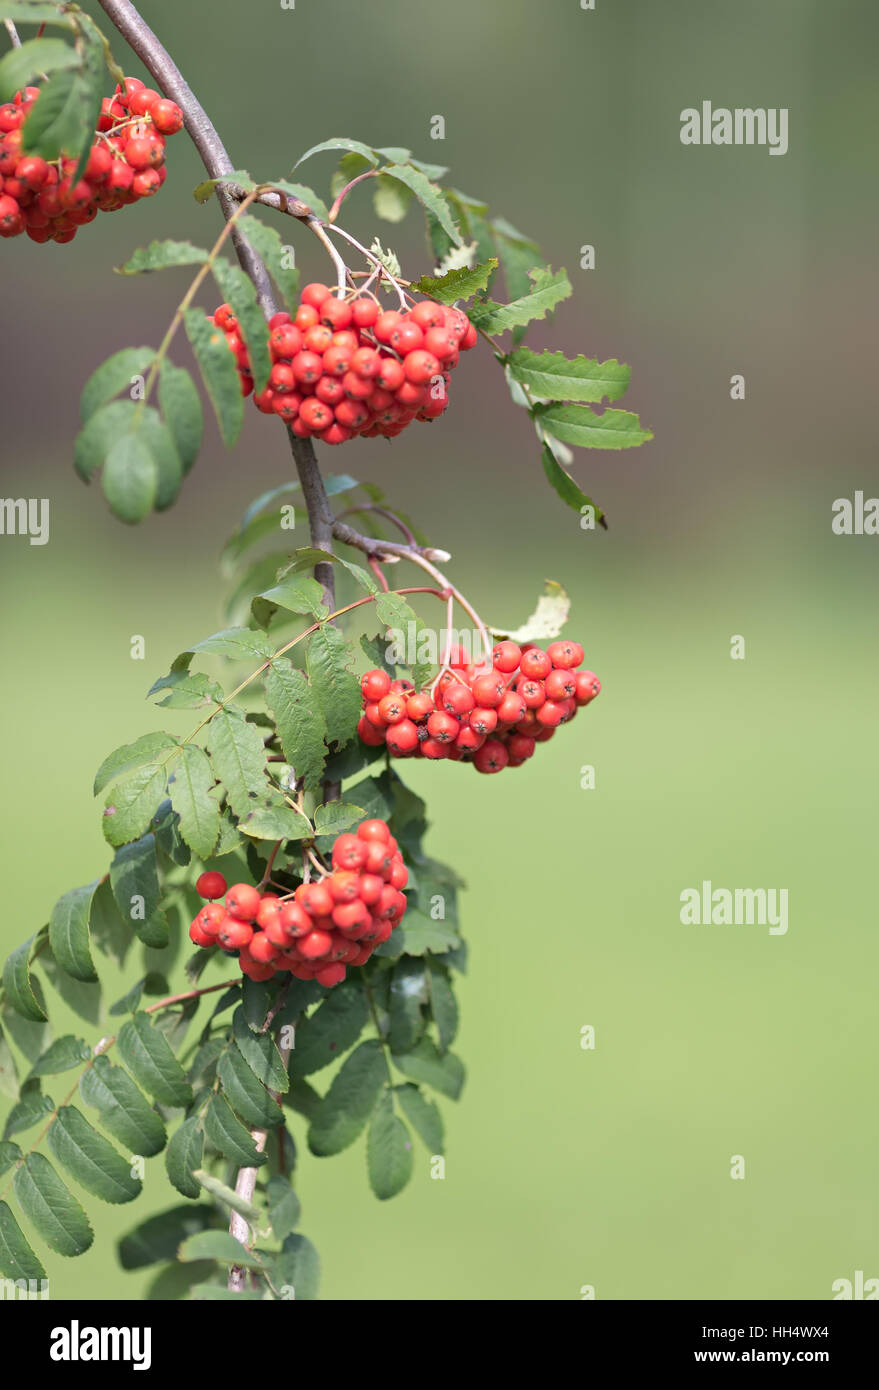 leuchtend roten Beeren der Eberesche, selektiven Fokus Stockfoto